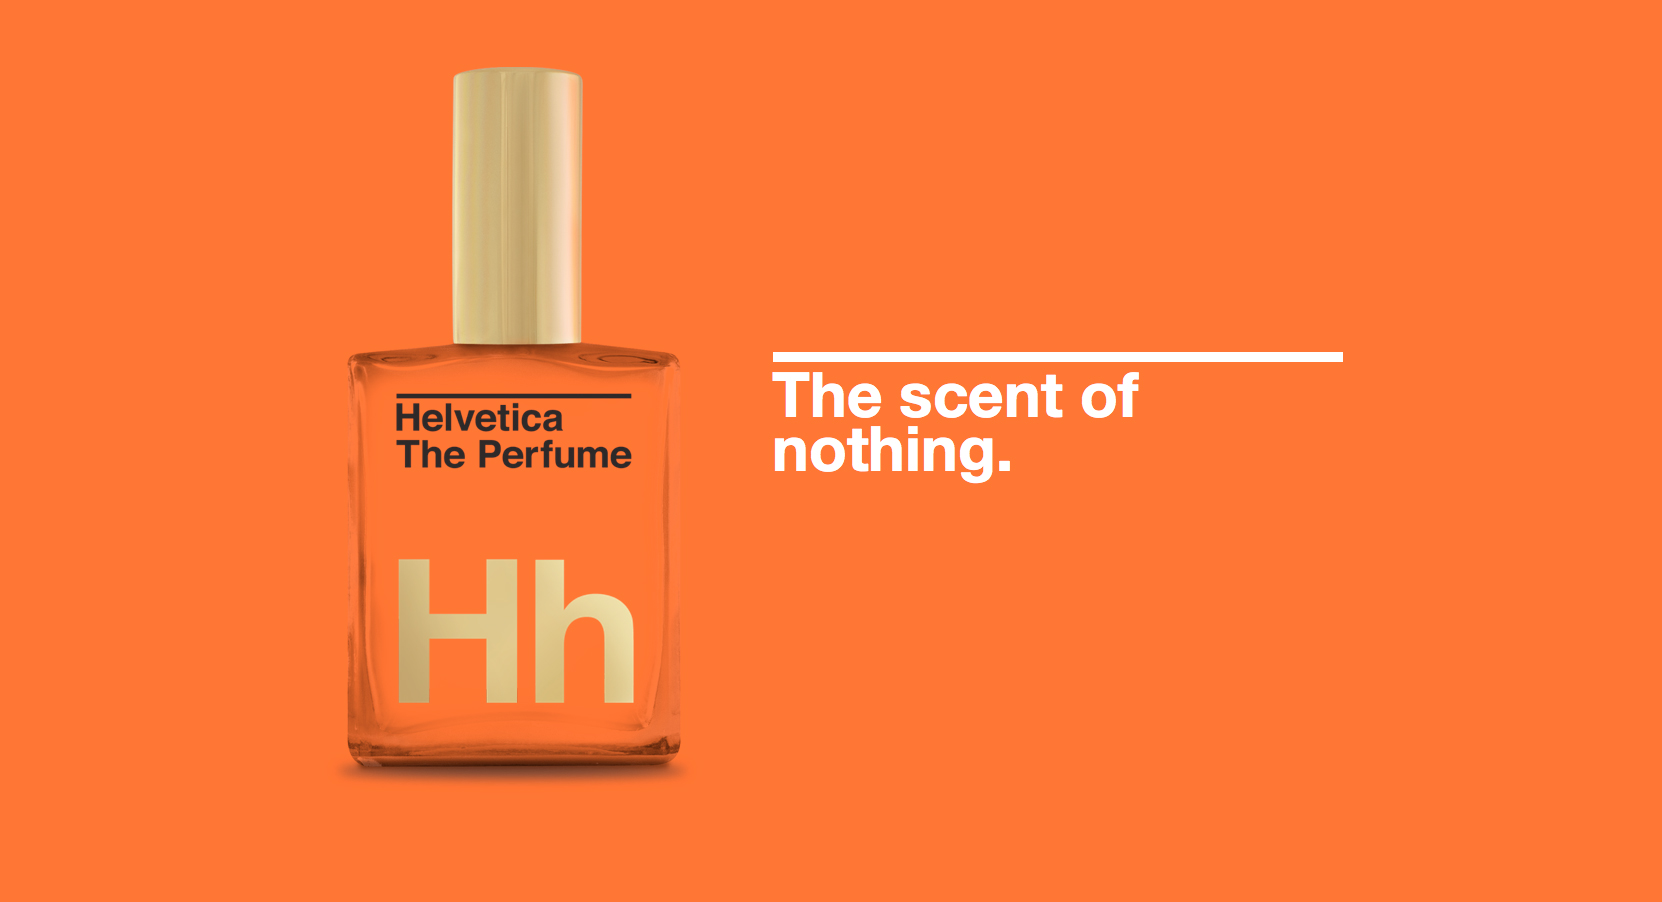 Helvetica Parfume